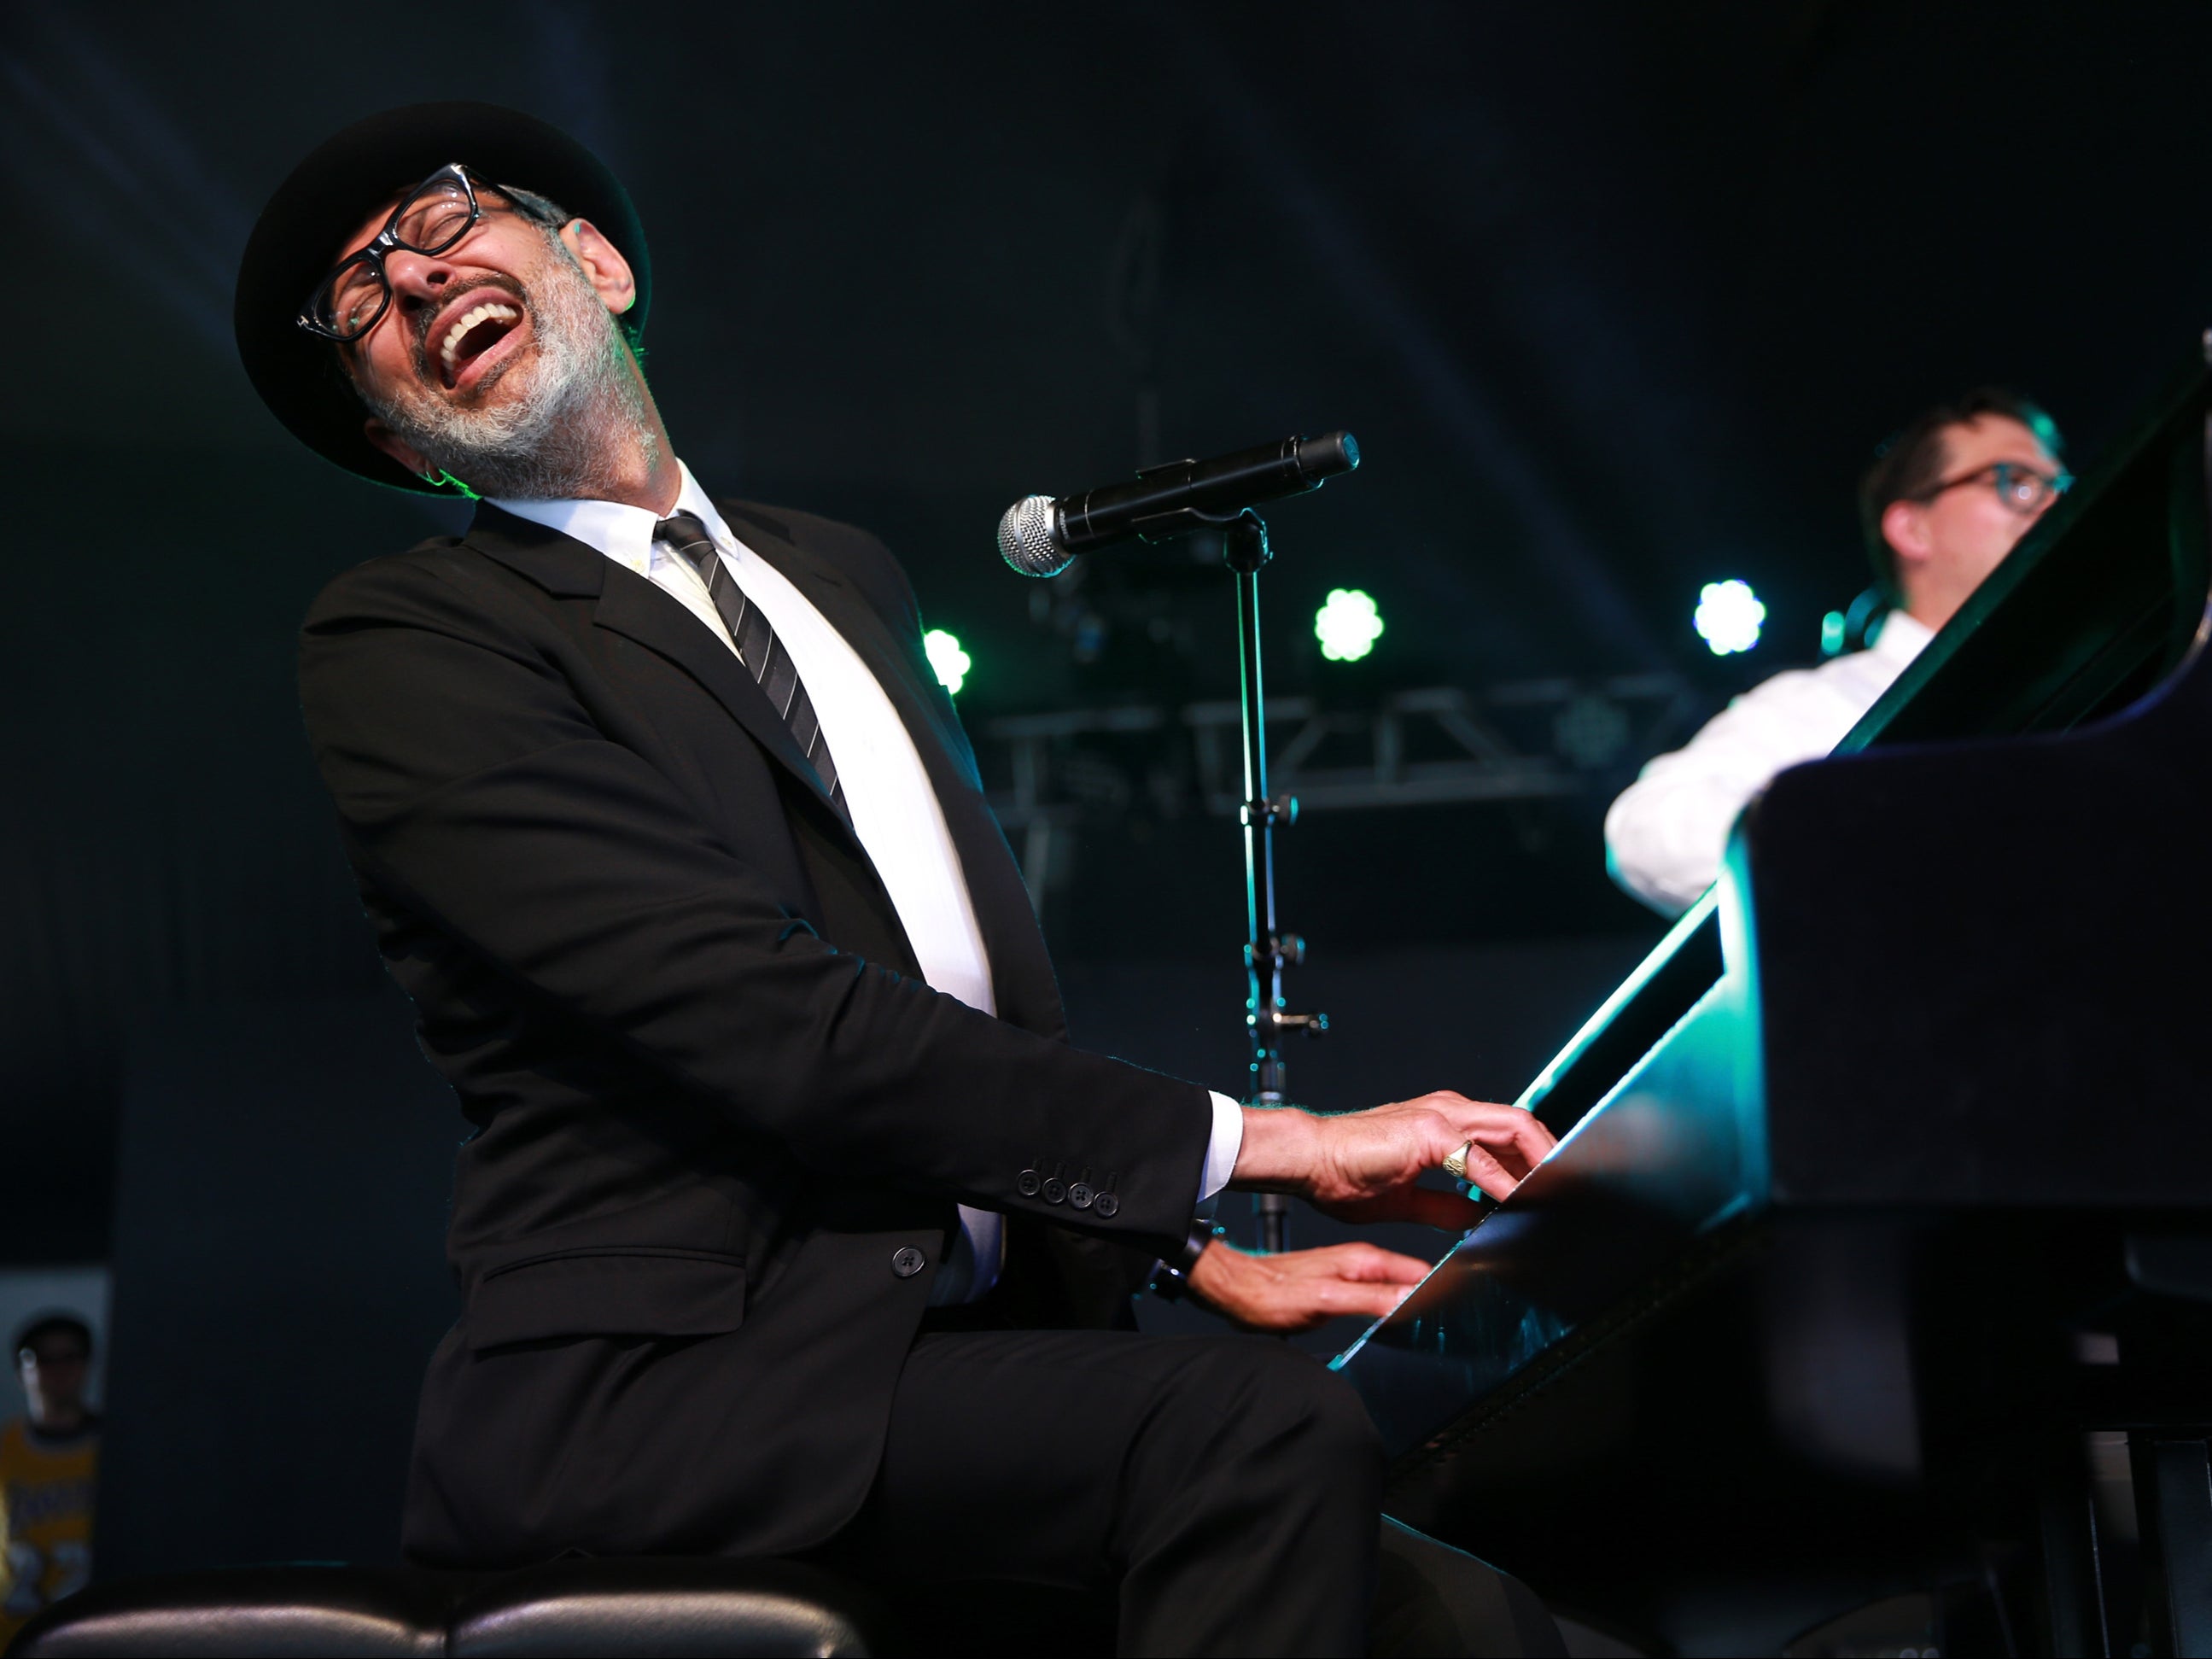 Jeff Goldblum performs at Arroyo Seco Weekend in 2017 in Pasadena, California